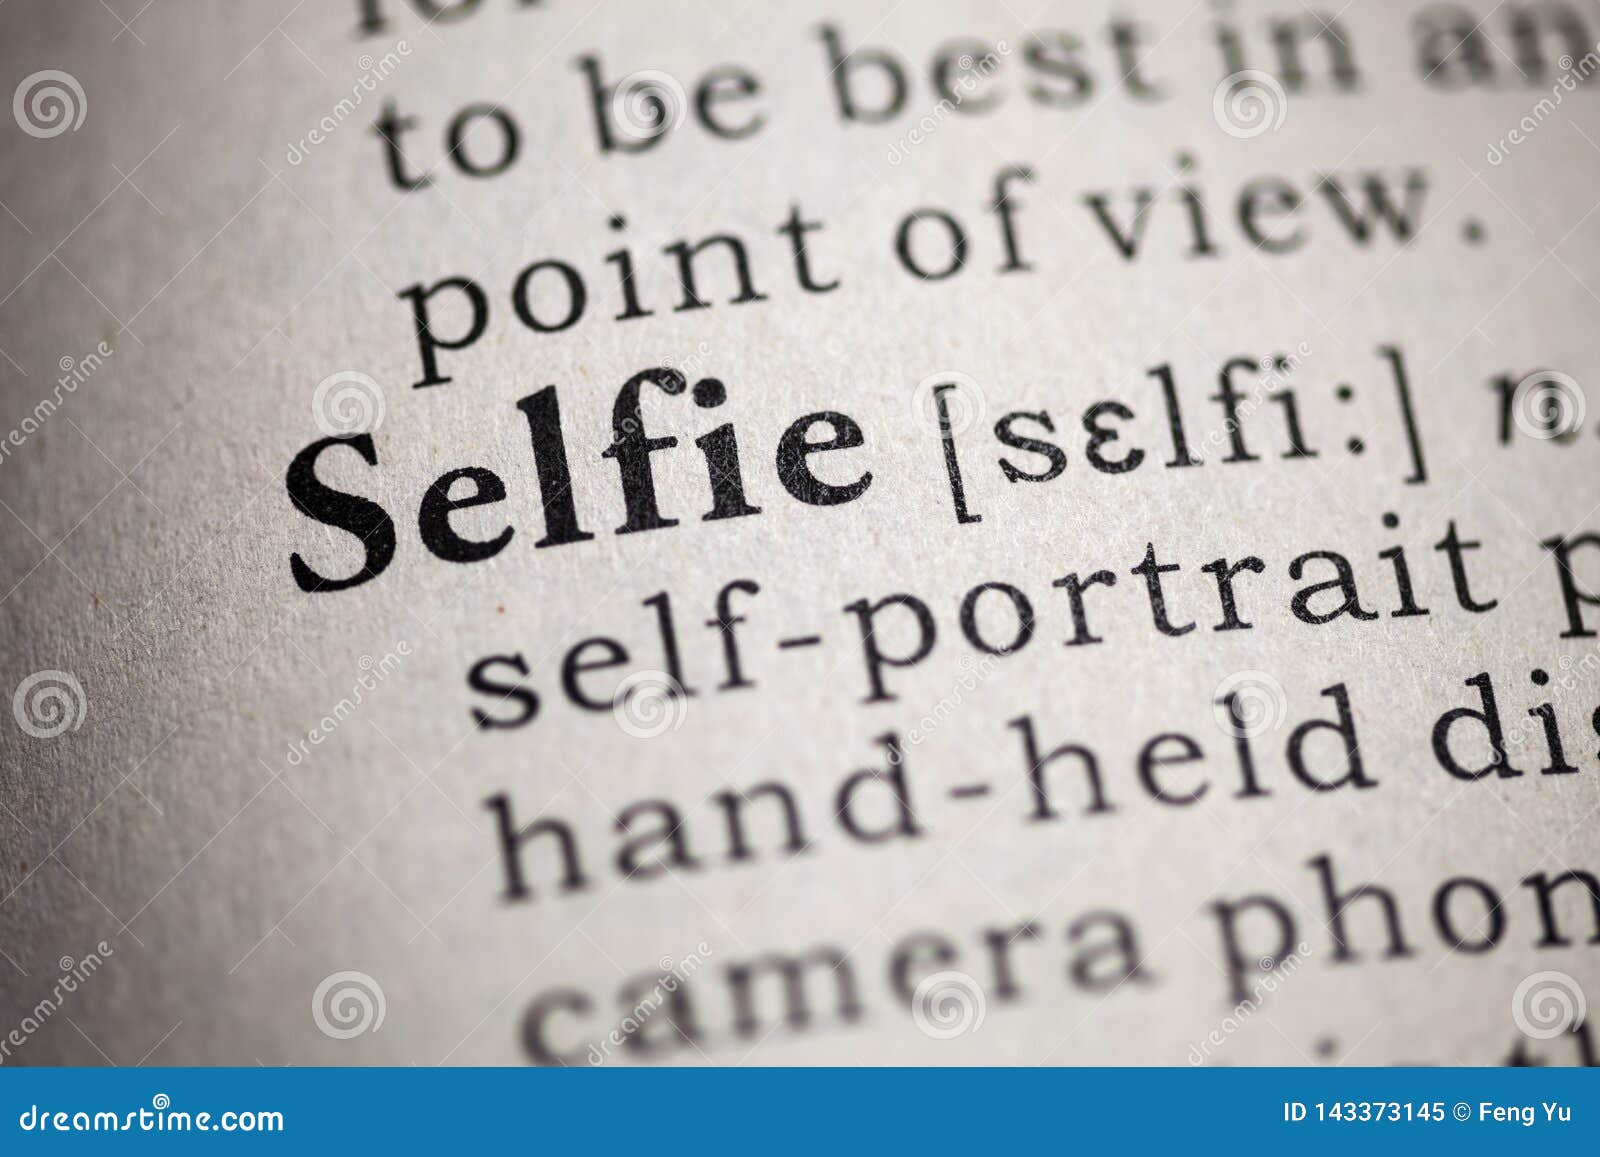 essay on selfie meaning